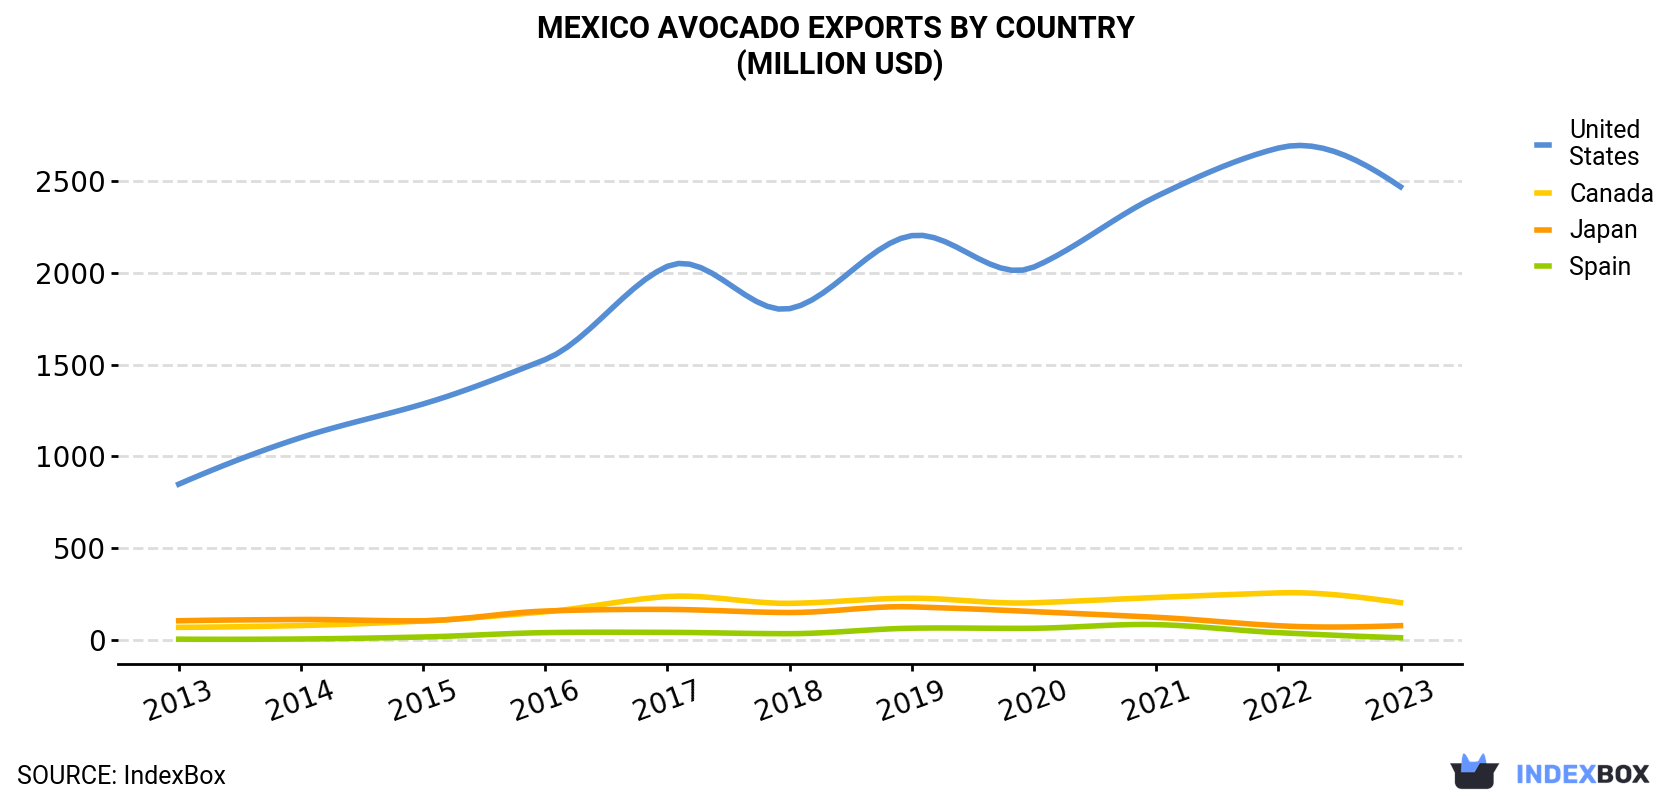 Mexico Avocado Exports By Country (Million USD)